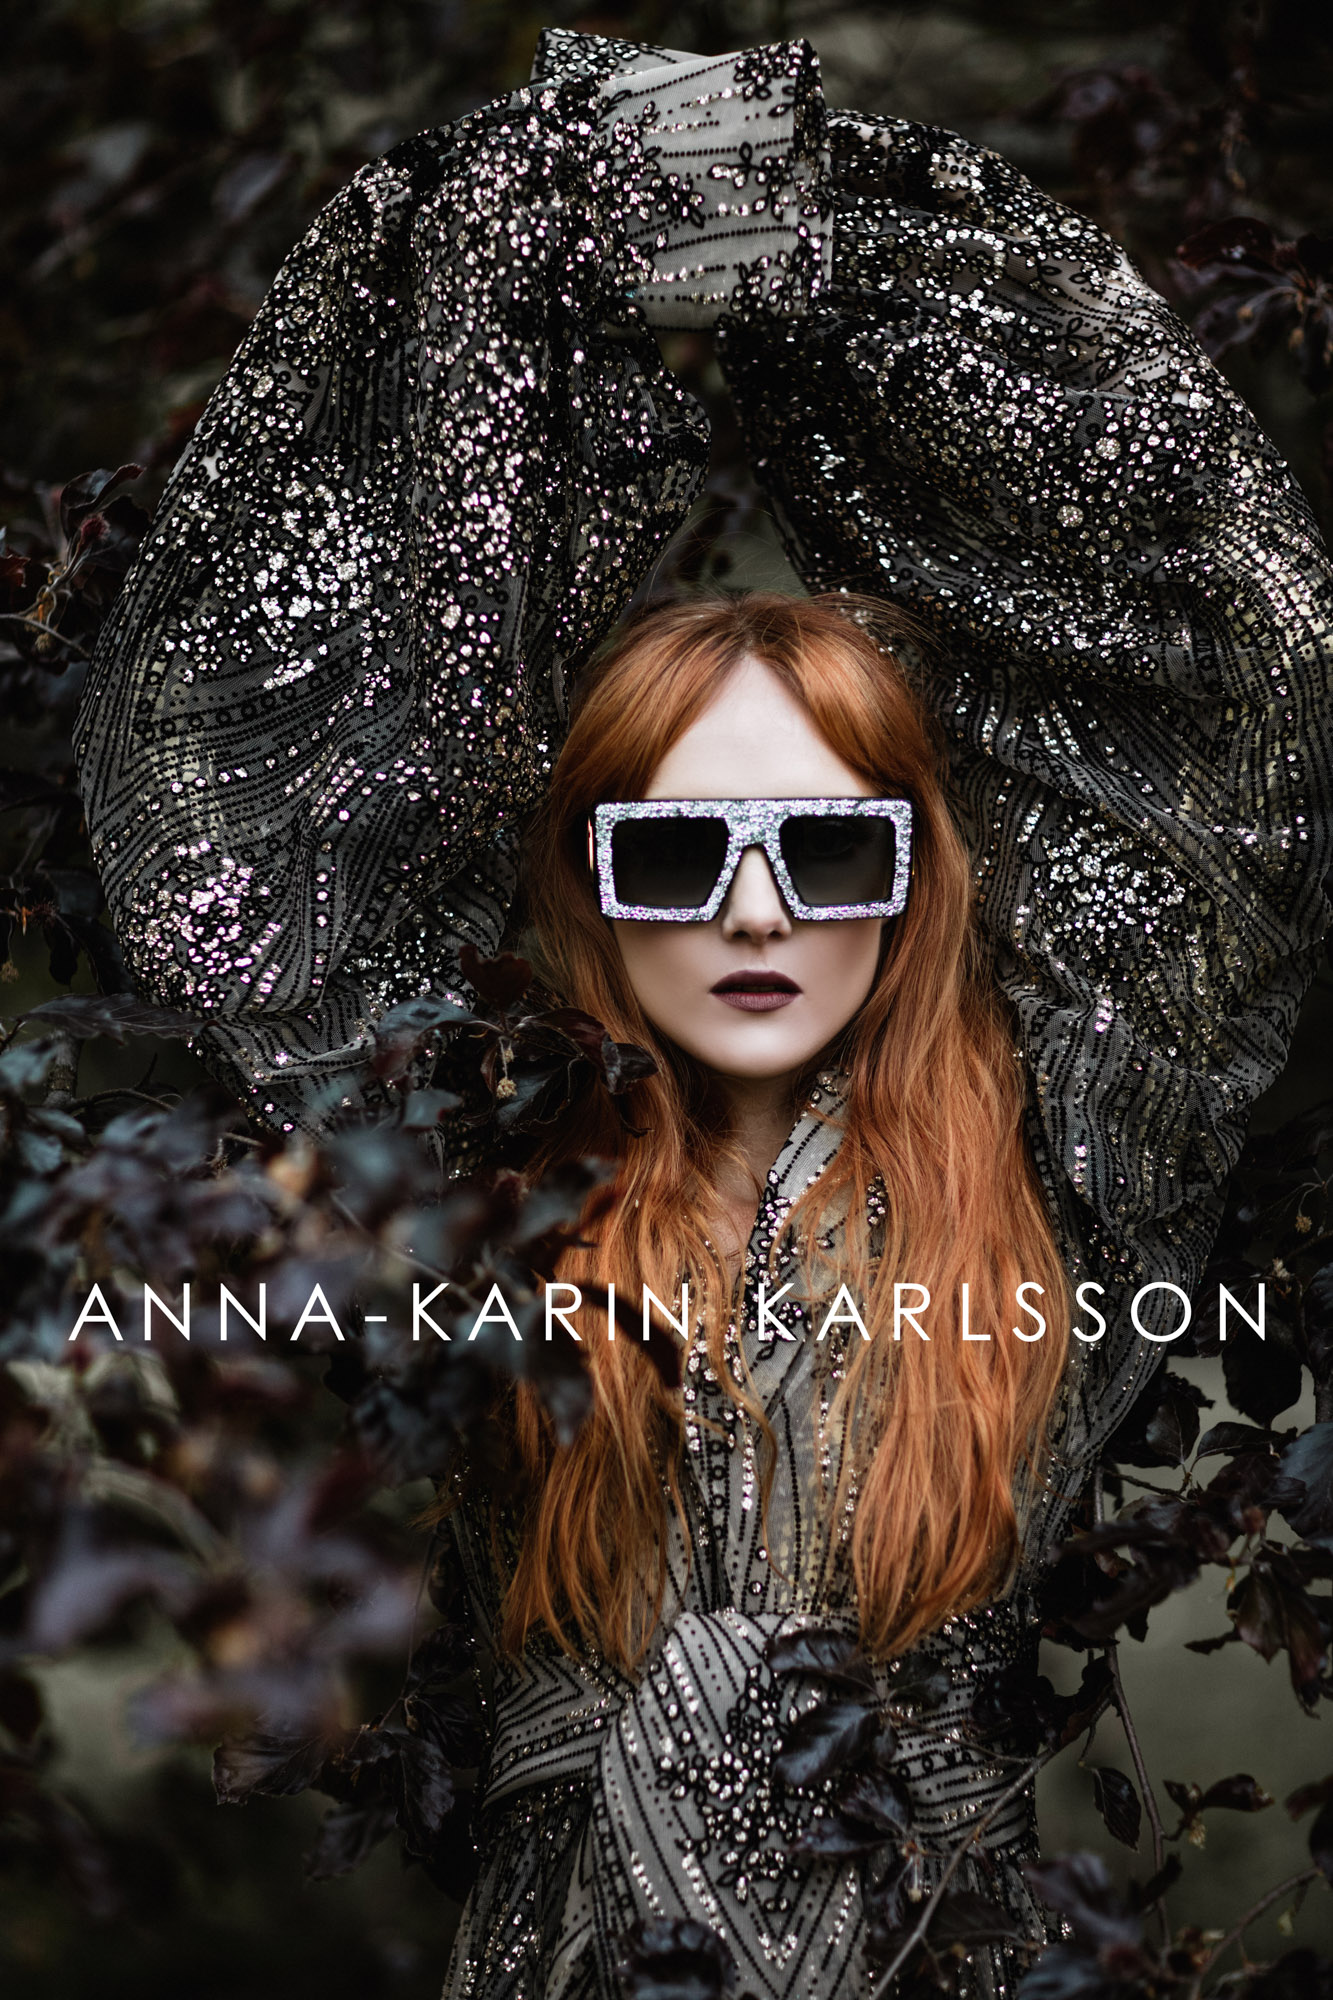 Campaign - ANNA-KARIN KARLSSON